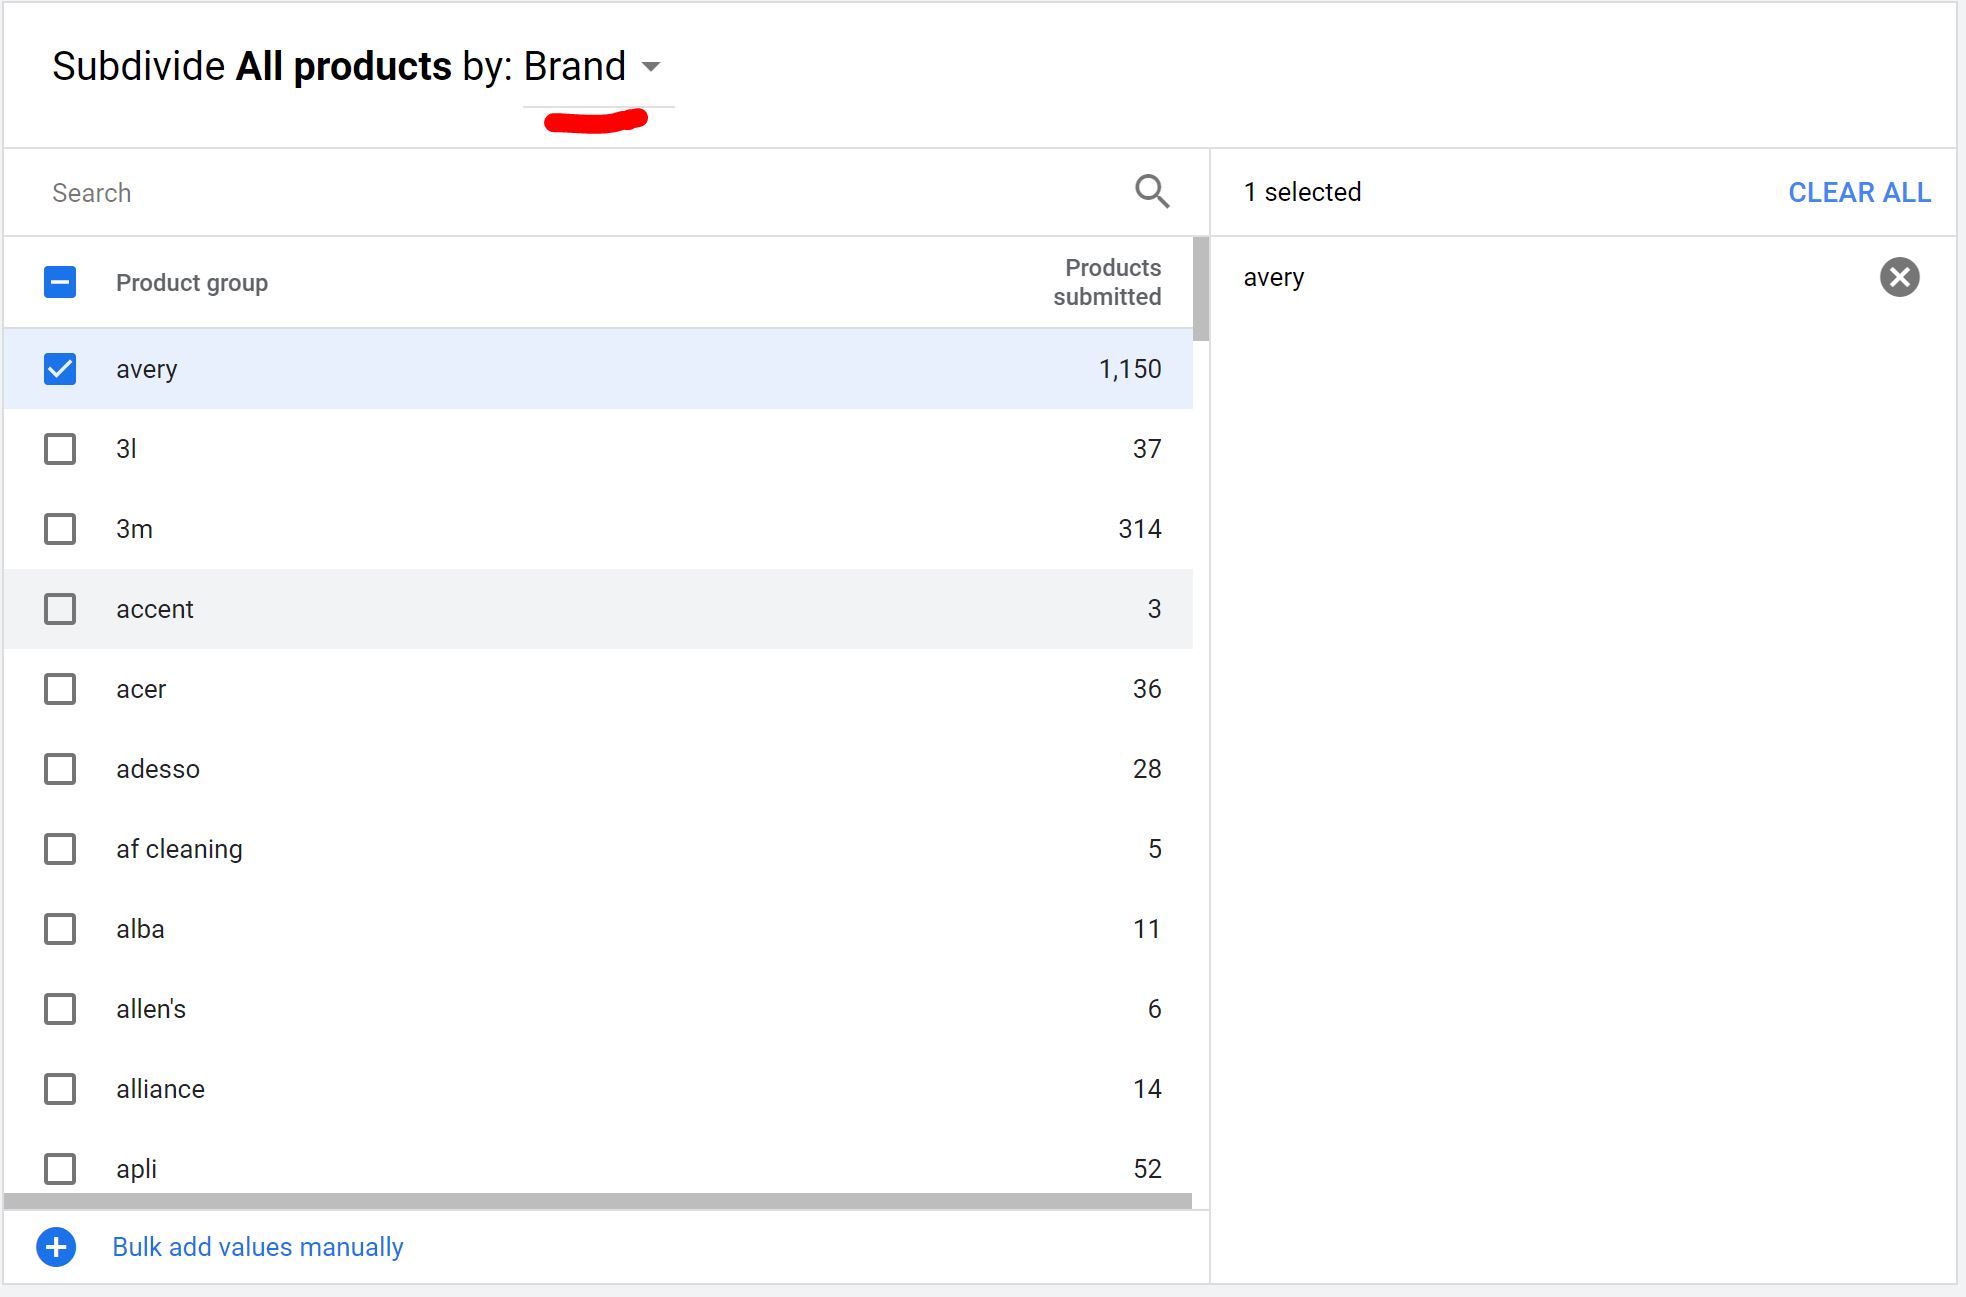 Google Smart Shopping - Brand Subdivision